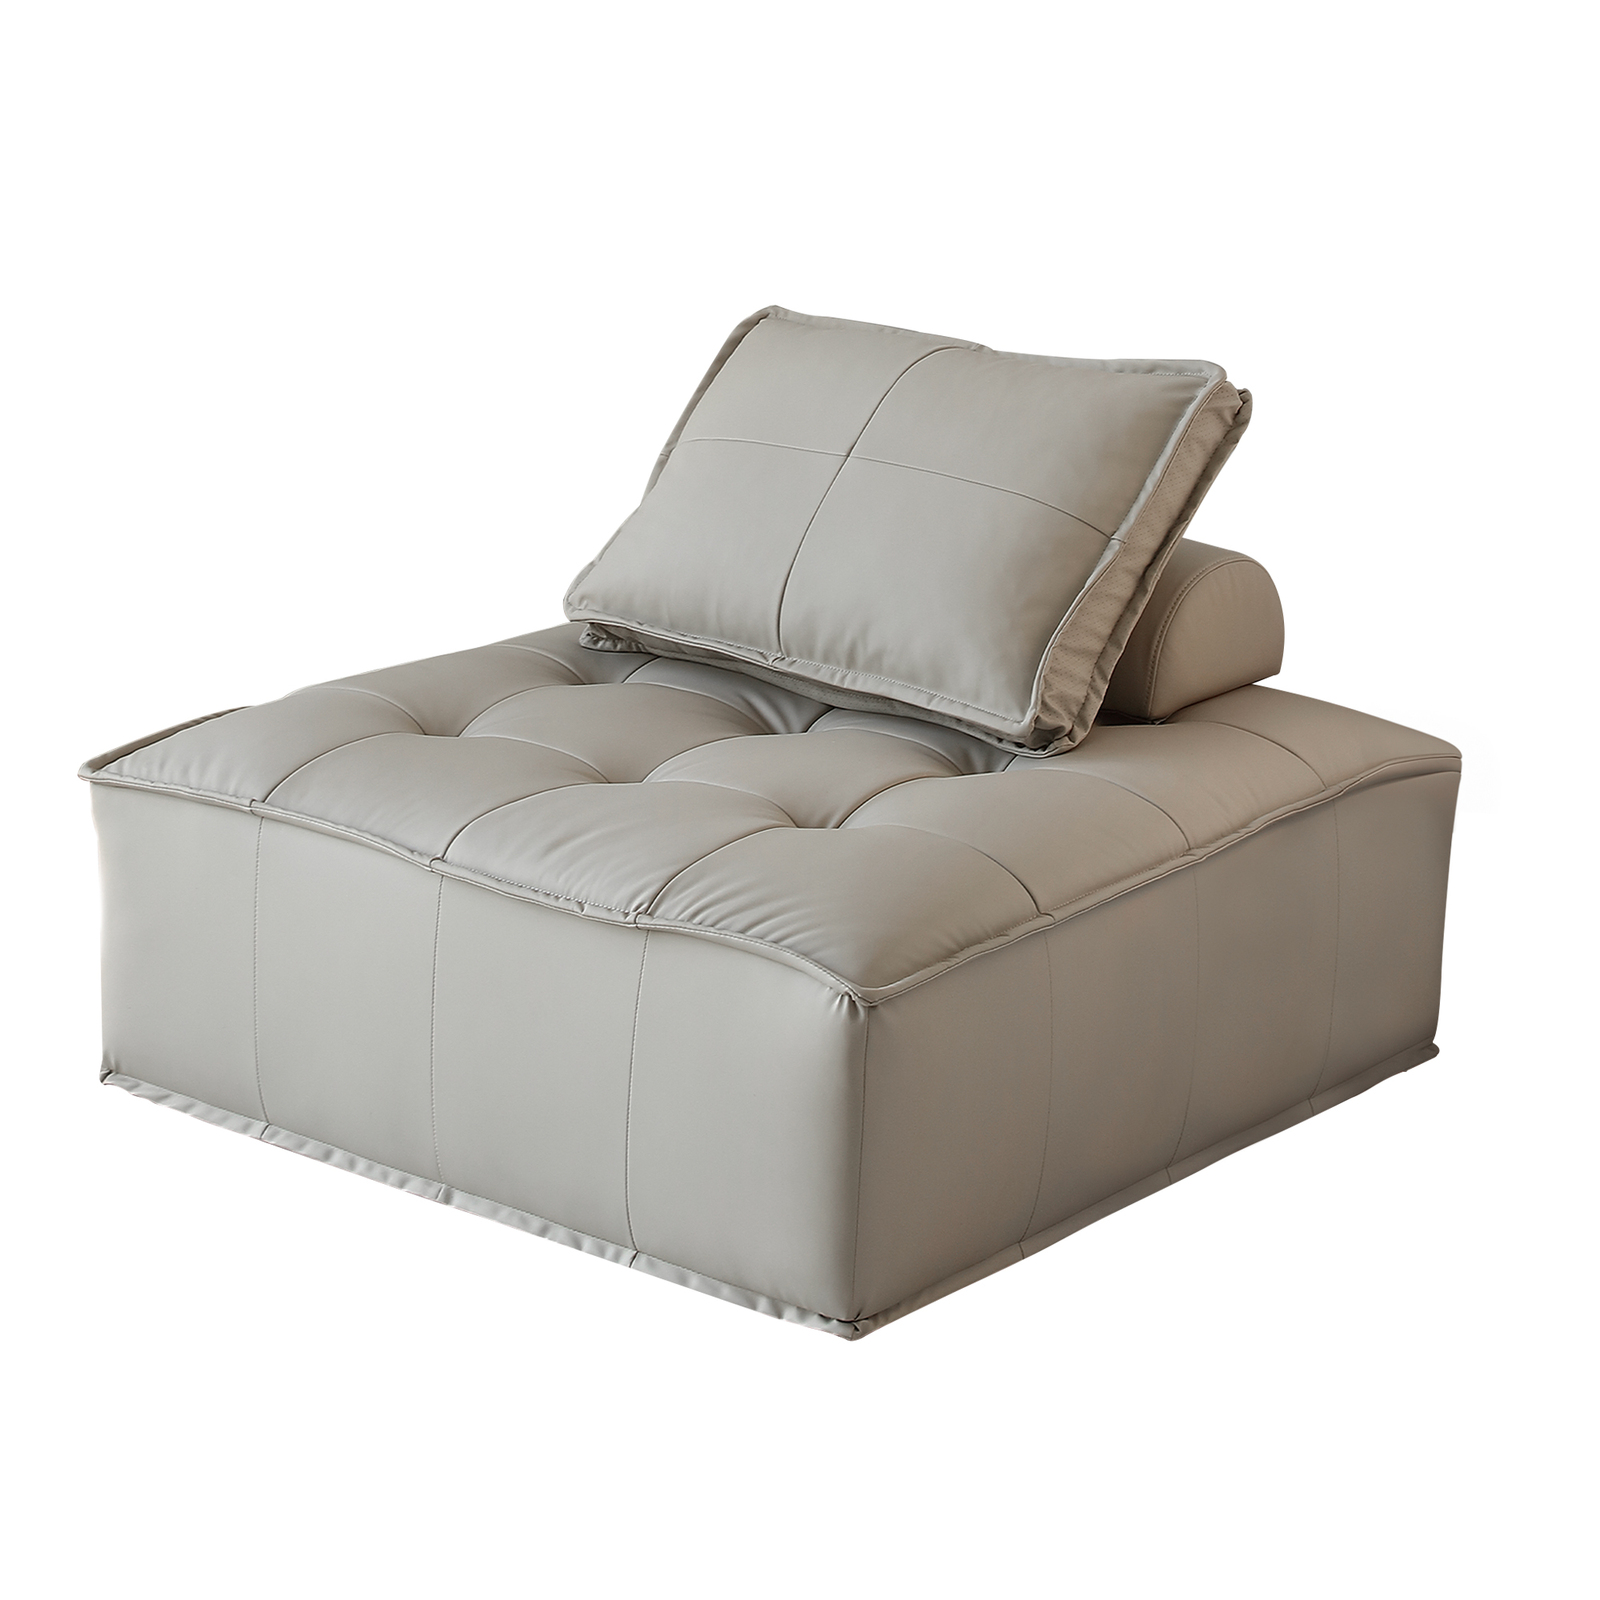 1pc Large Modular Sofa Lounge Chair Tofu Sofa Armless Seat PU Leather Couch Seat - Grey